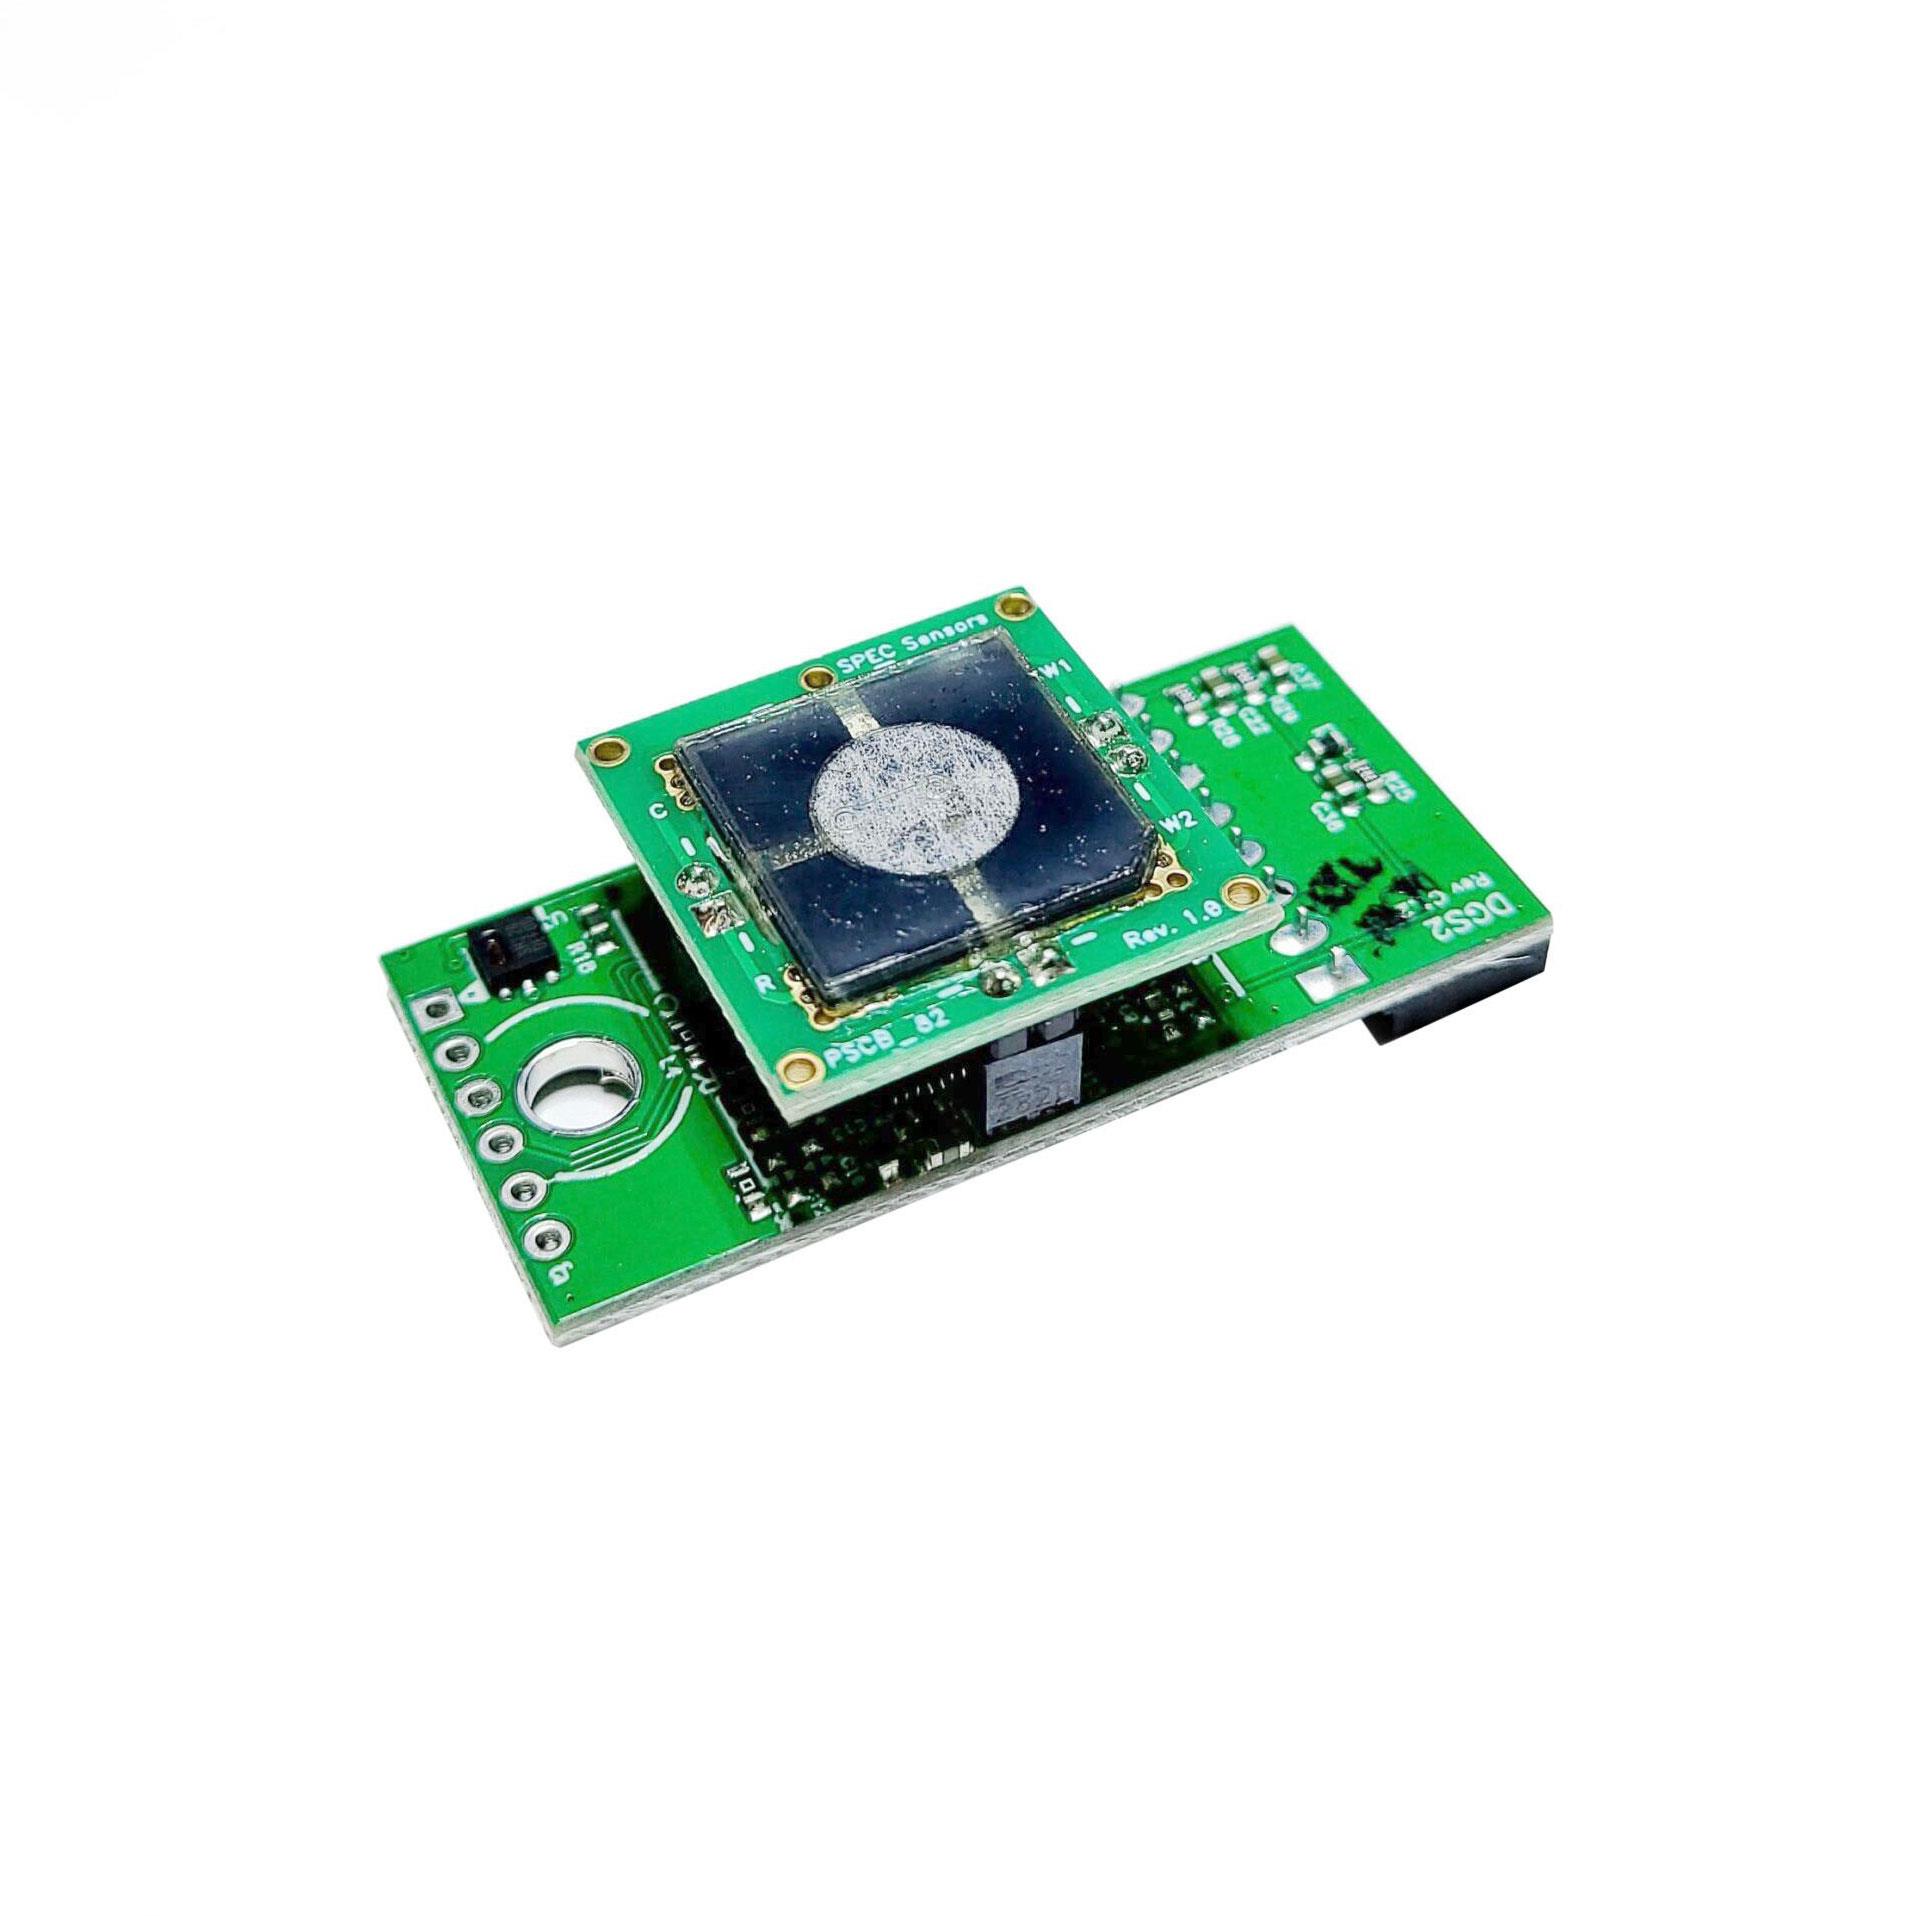 970-900 SPEC Sensors (a division of Interlink Electronics